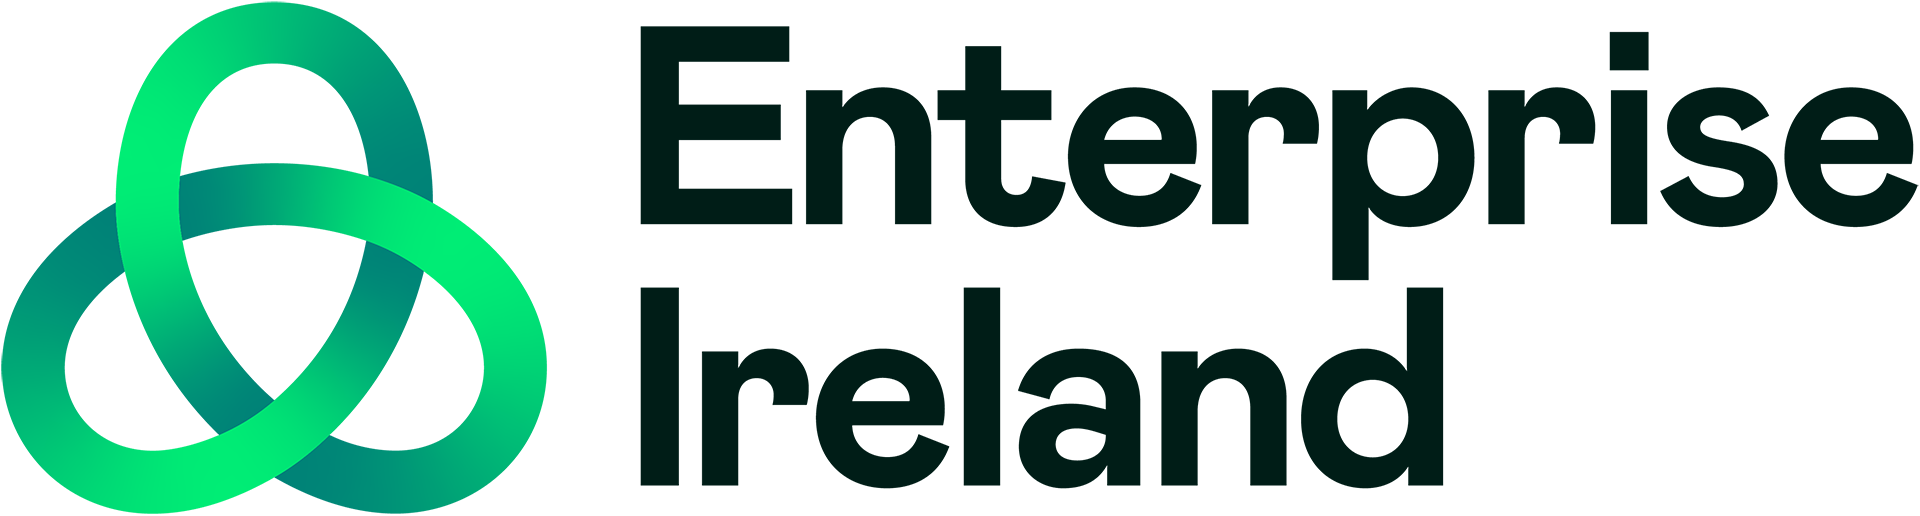 Enterprise Ireland.png